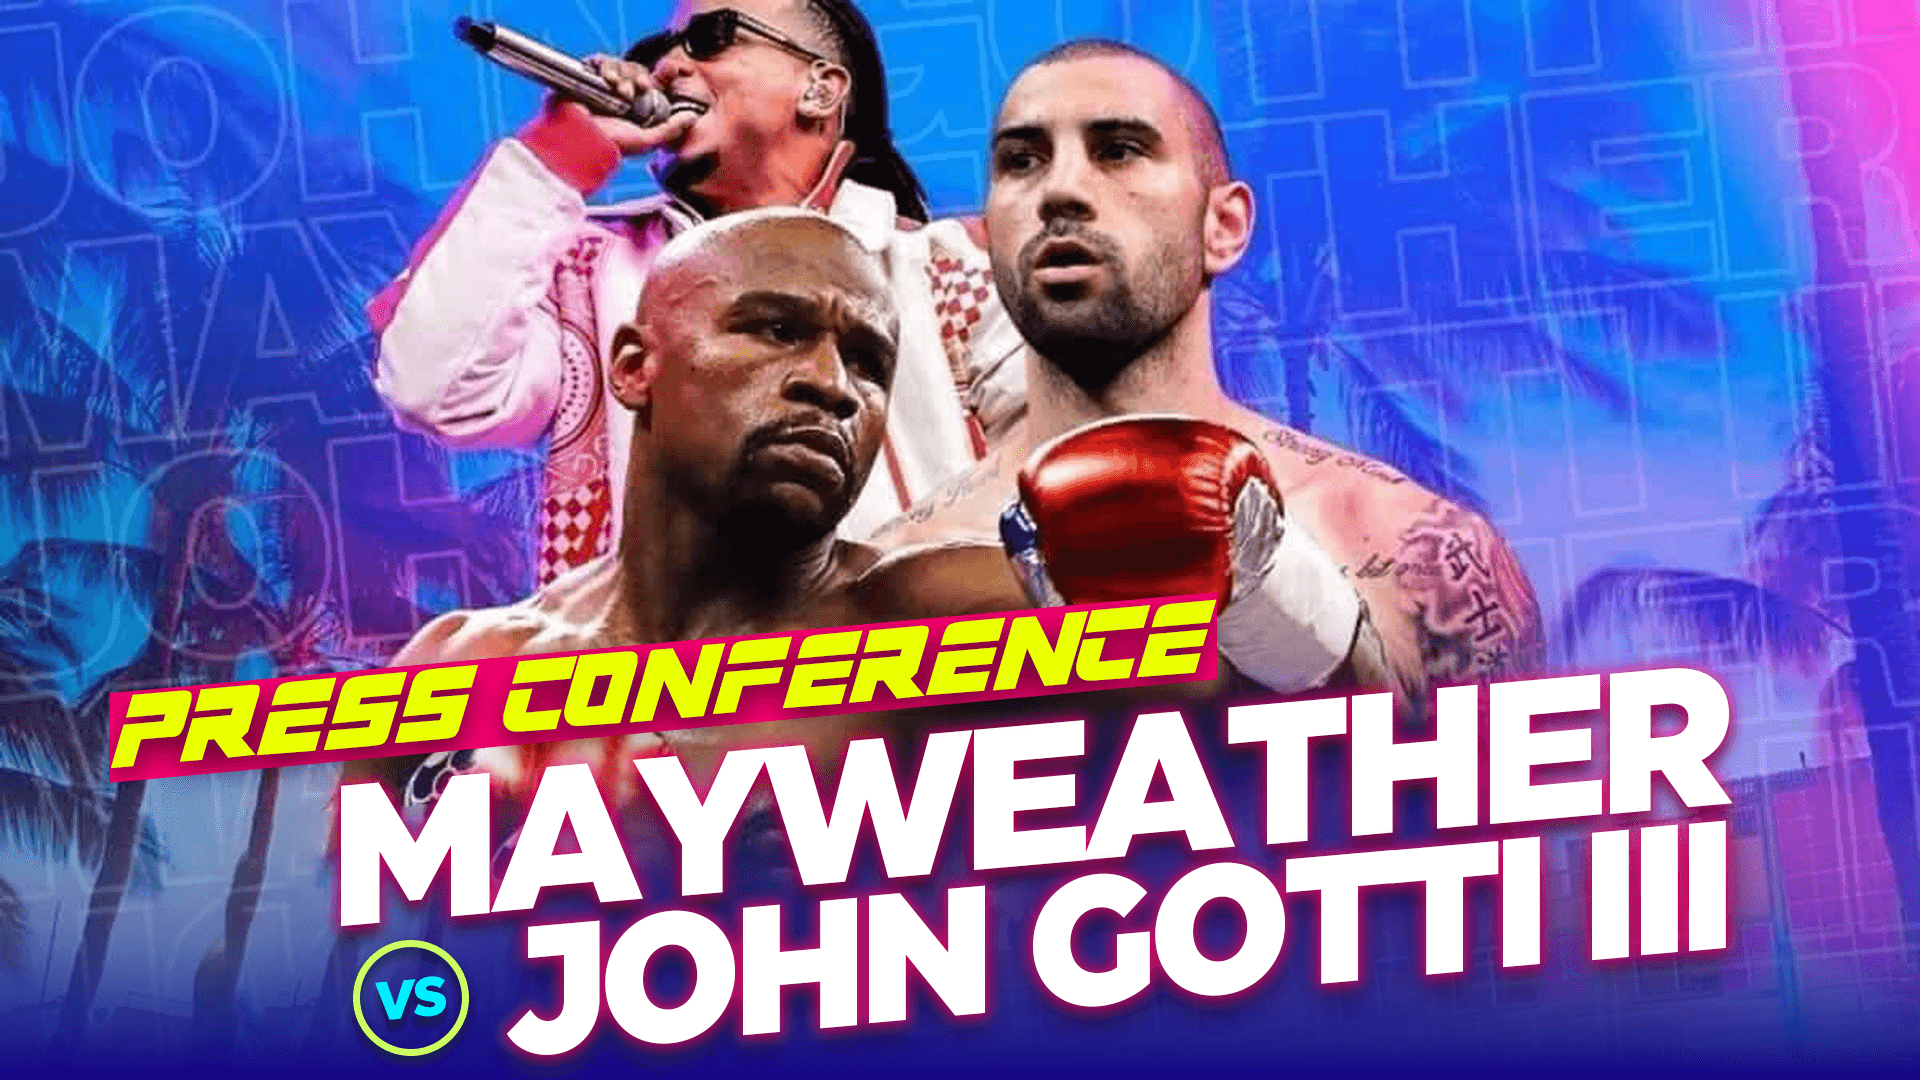 Press Conference  - Floyd Mayweather vs John Gotti III 